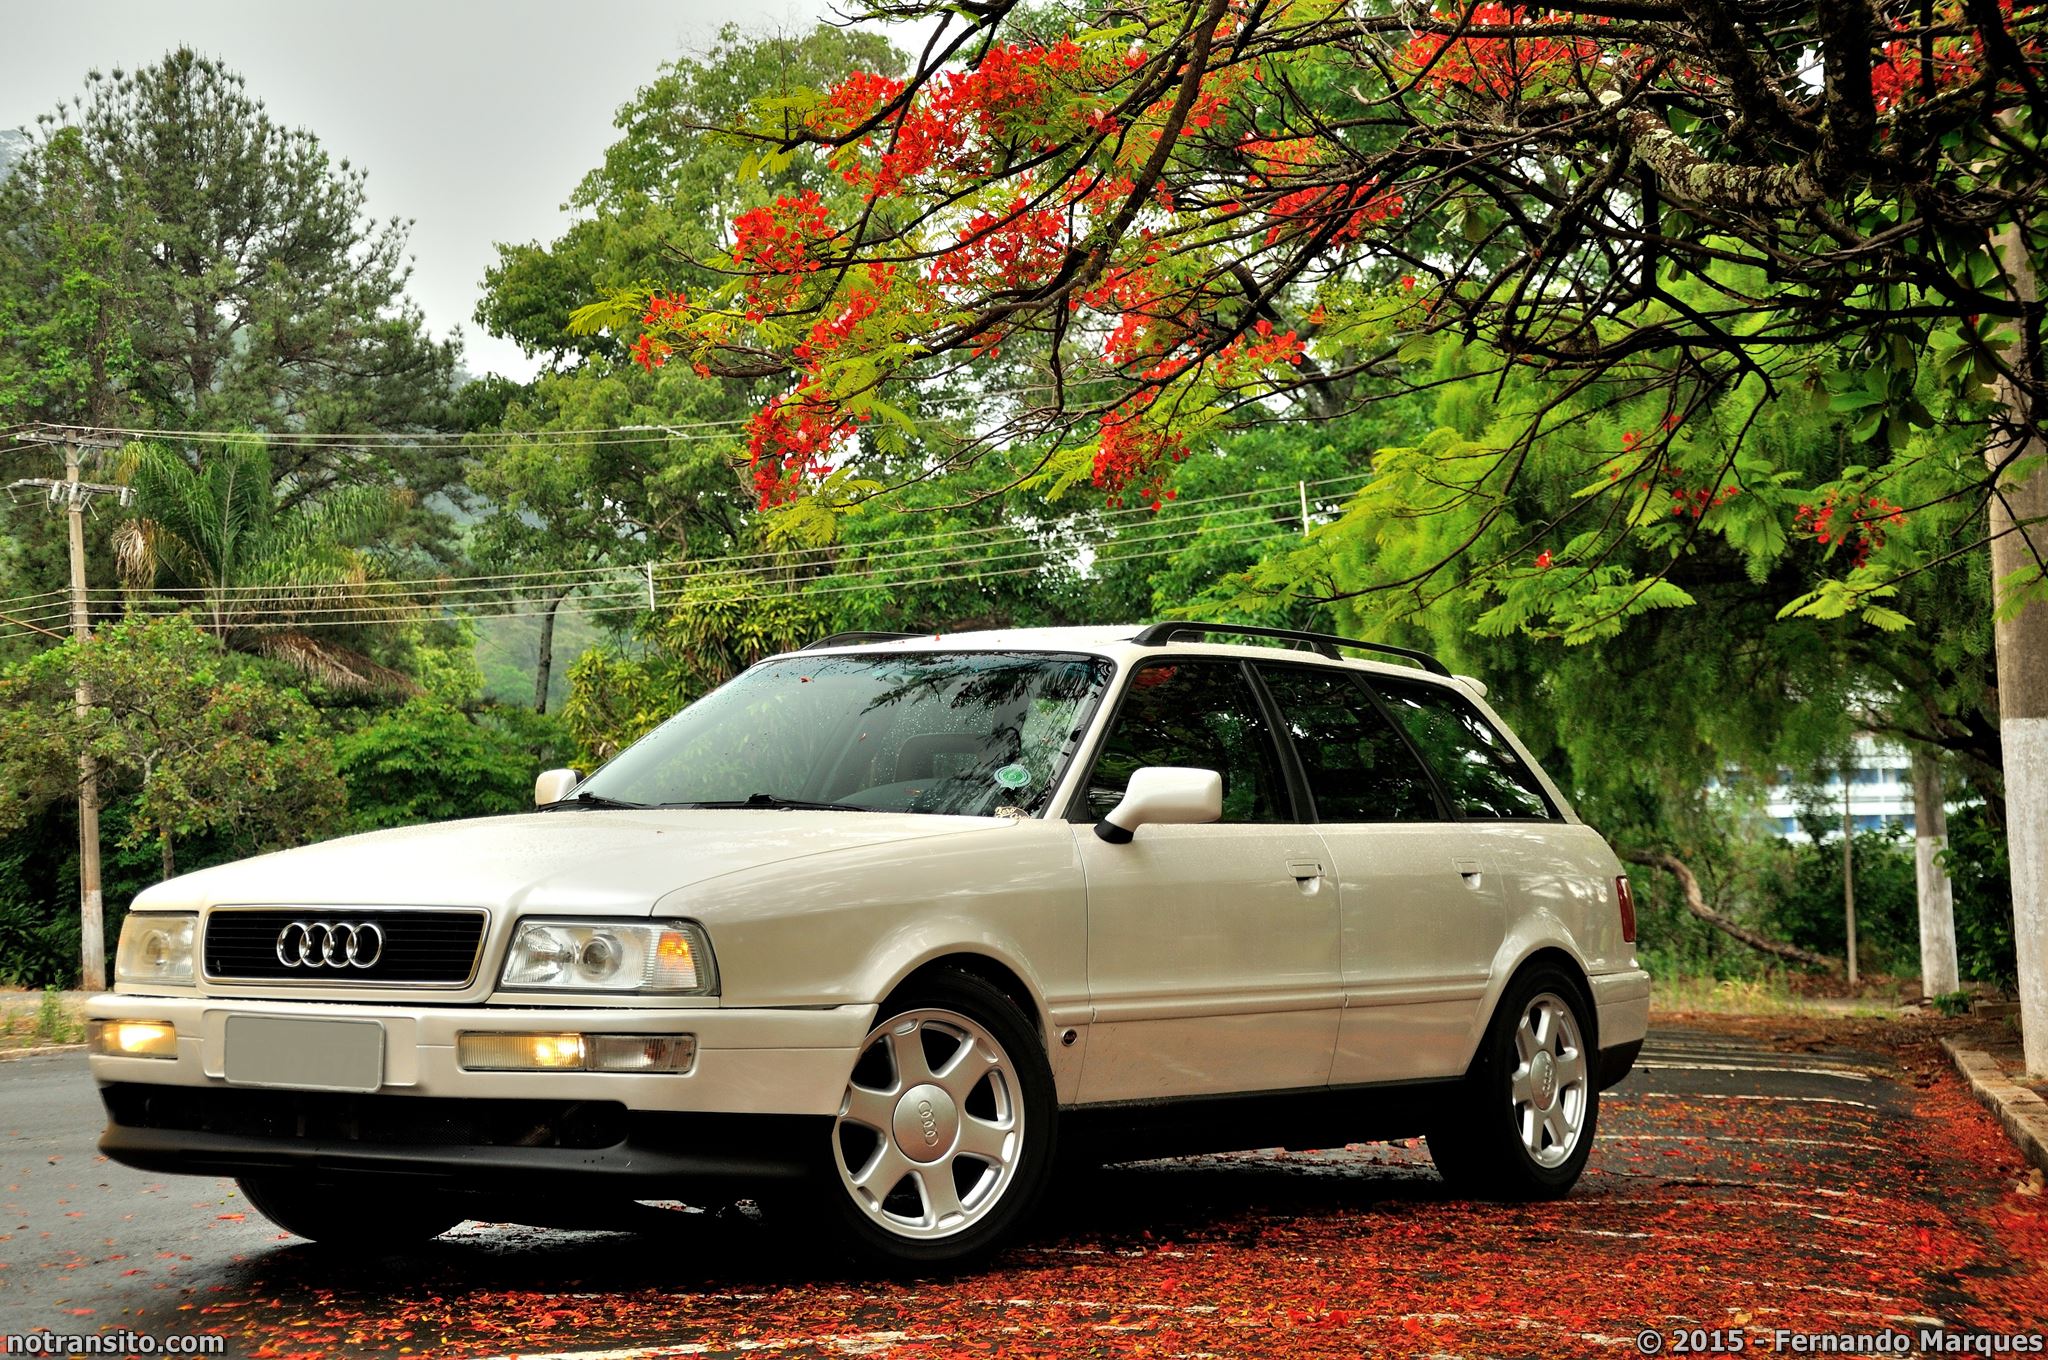 Audi 80 Avant Pearl White Metallic Tricoat, Águas de Lindóia